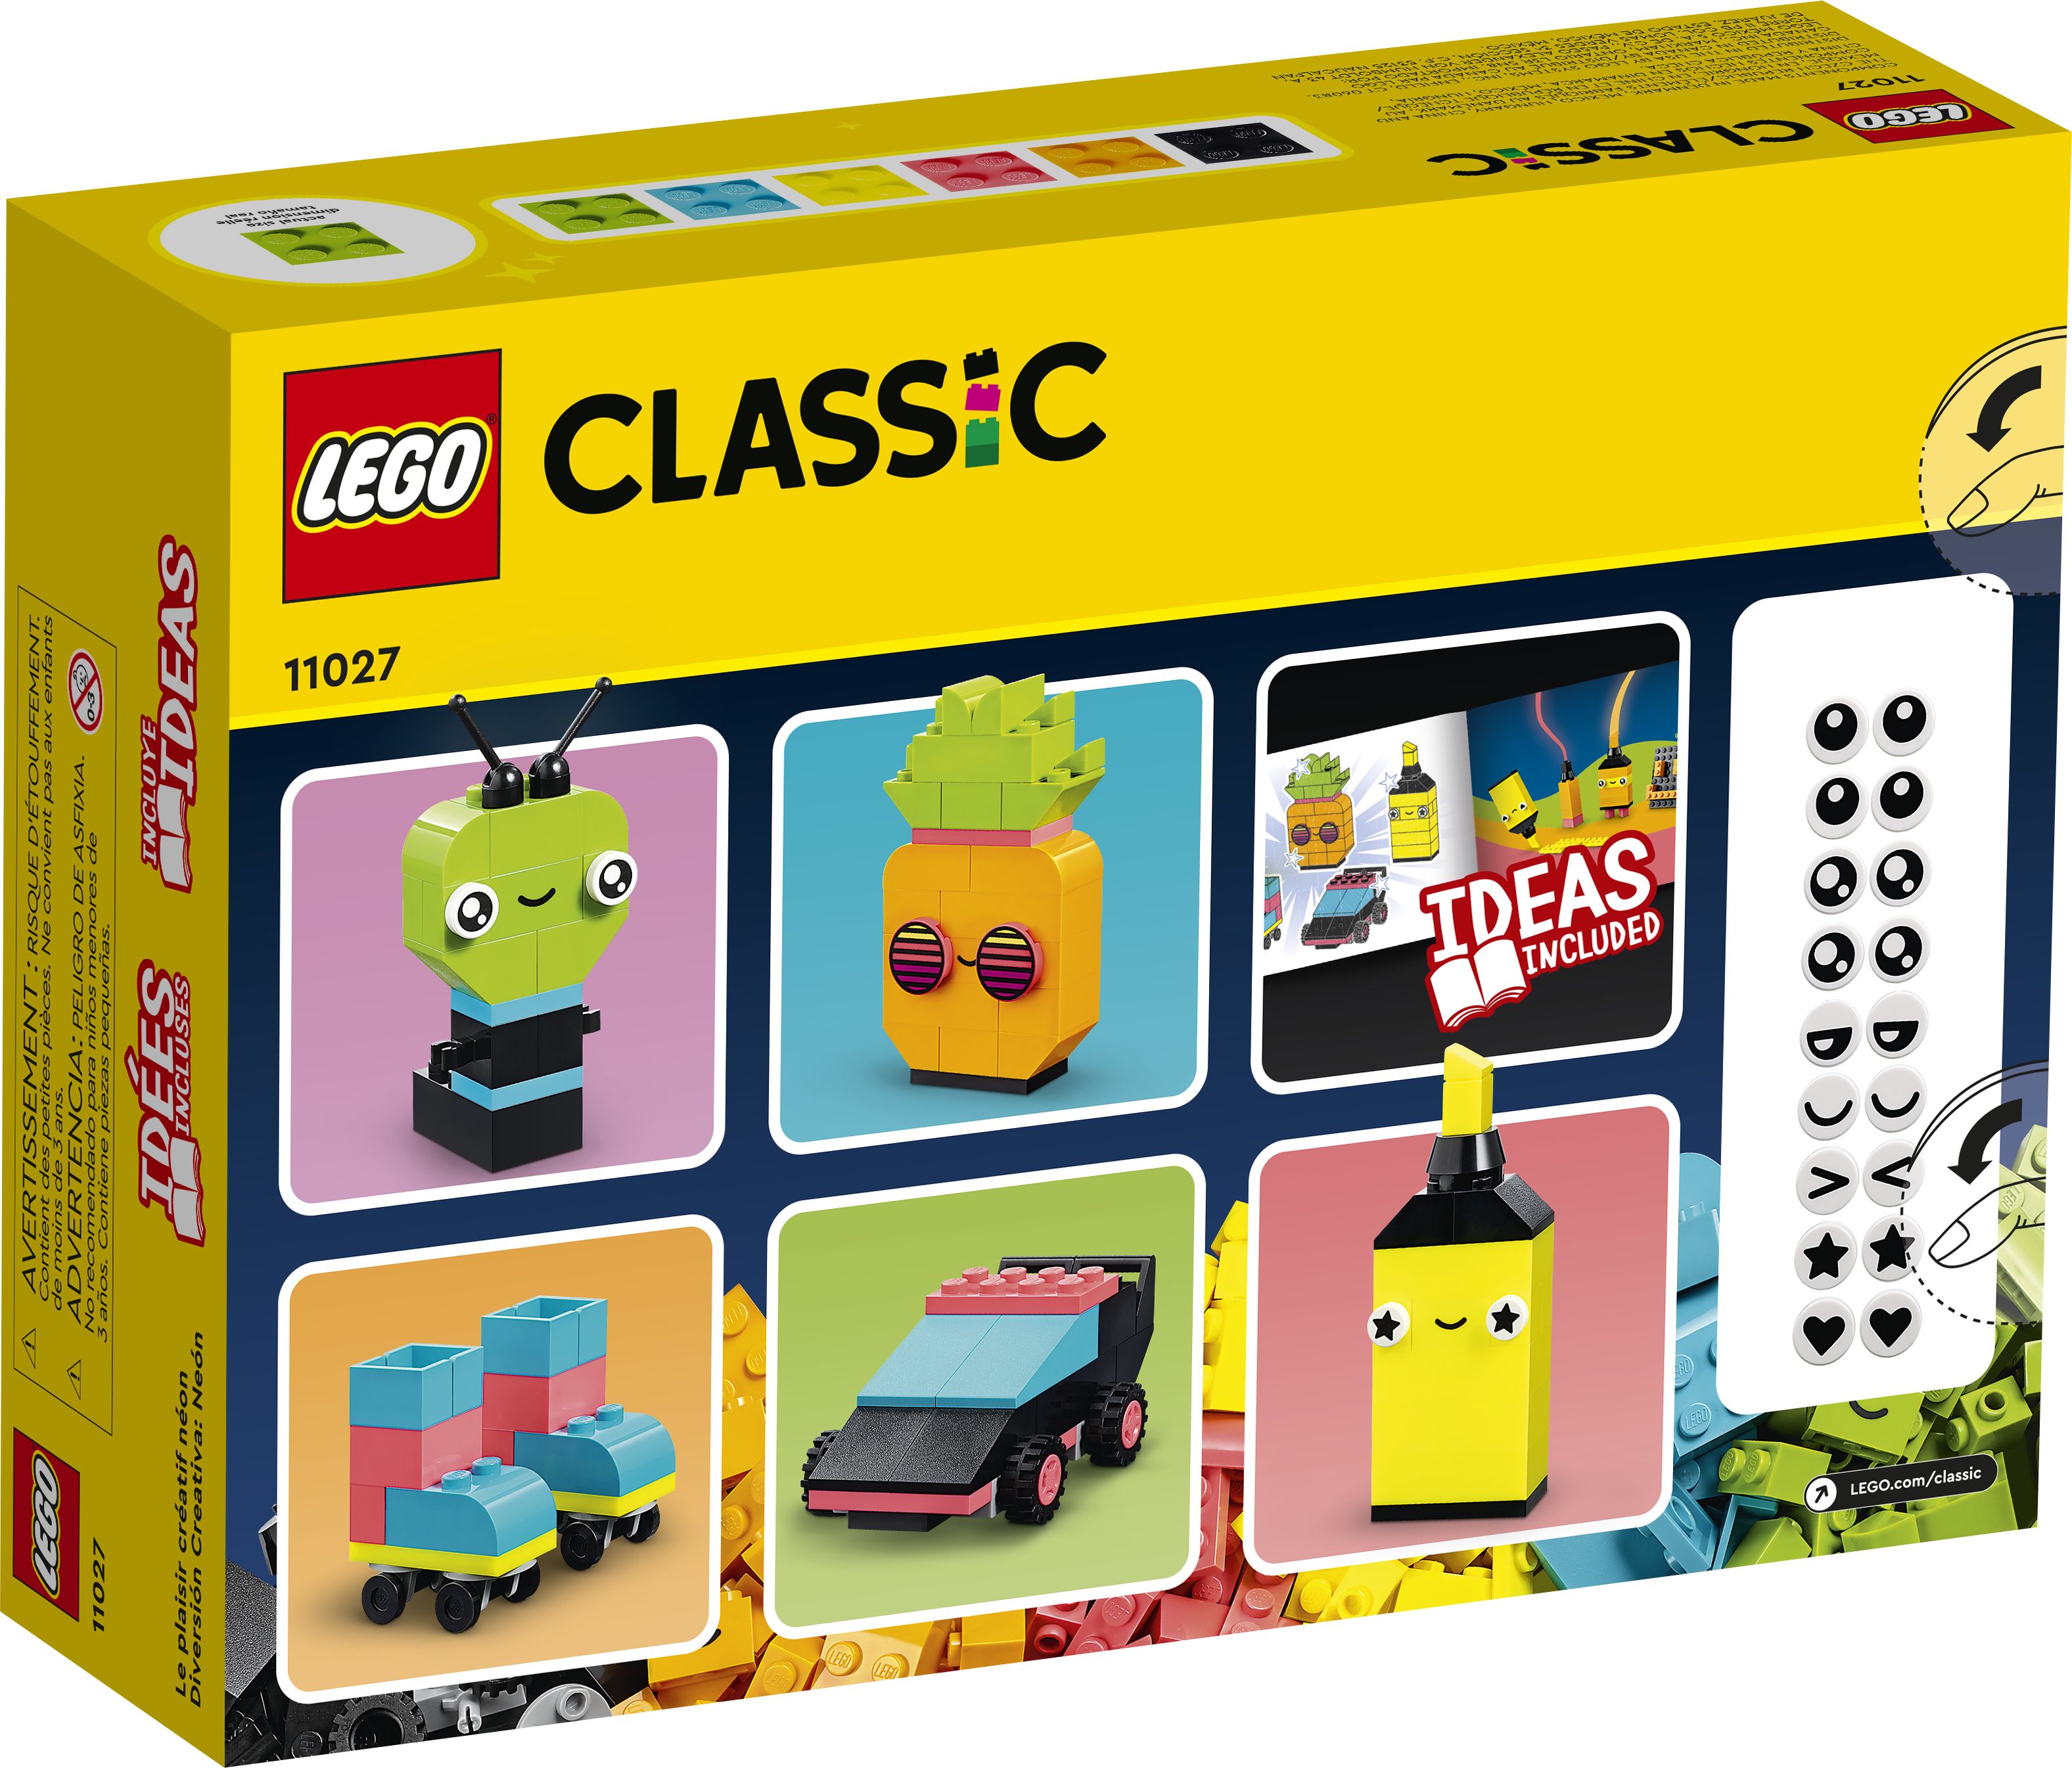 LEGO Classic 11027 Neon Kreativ-Bauset LEGO_11027_Box5_v39.jpg